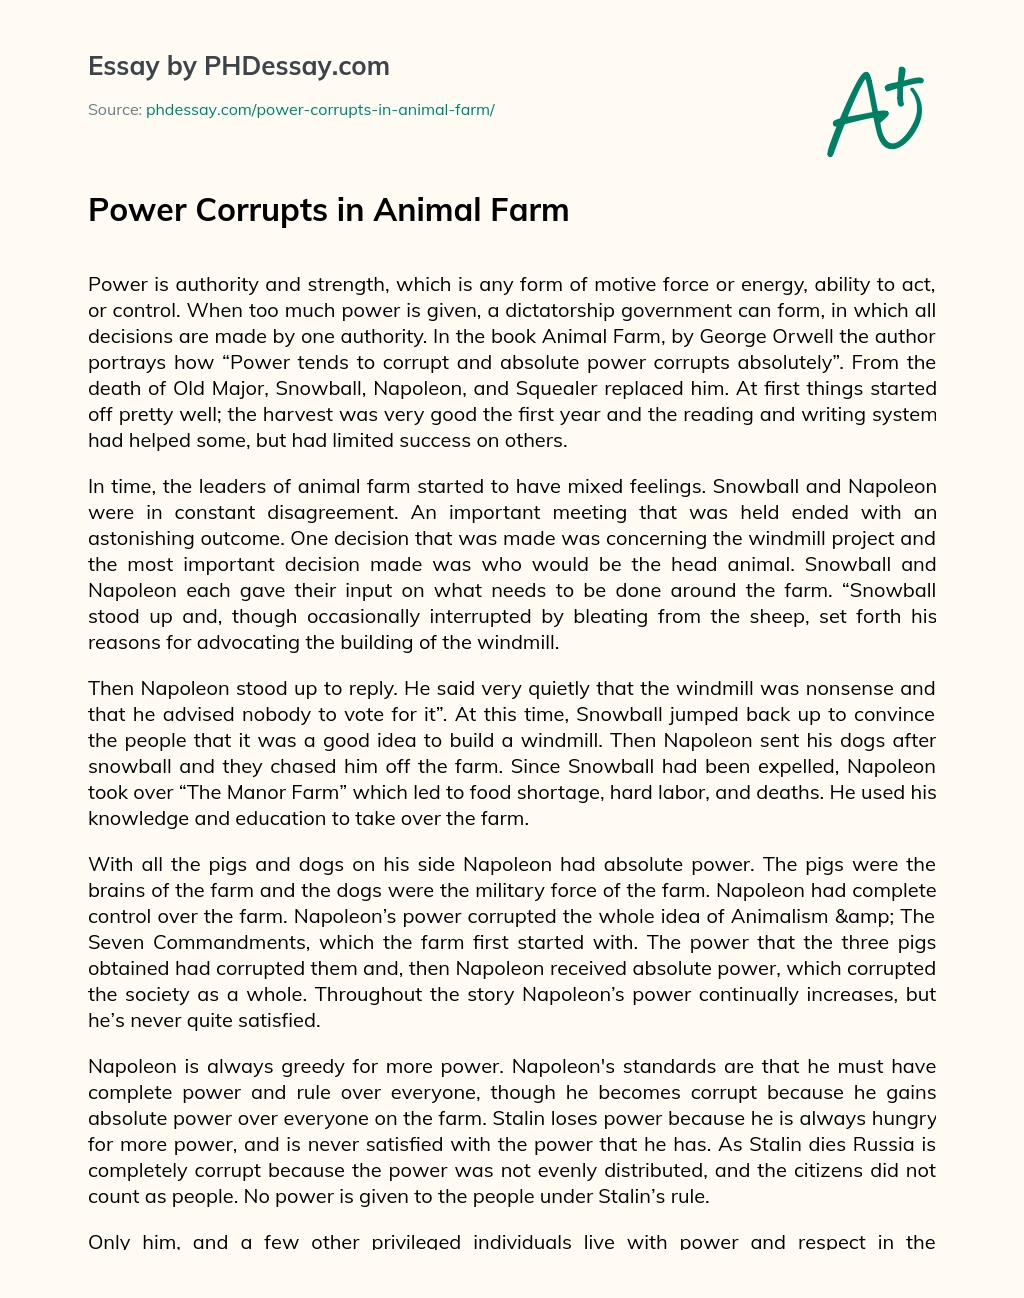 animal farm essay on power corrupts